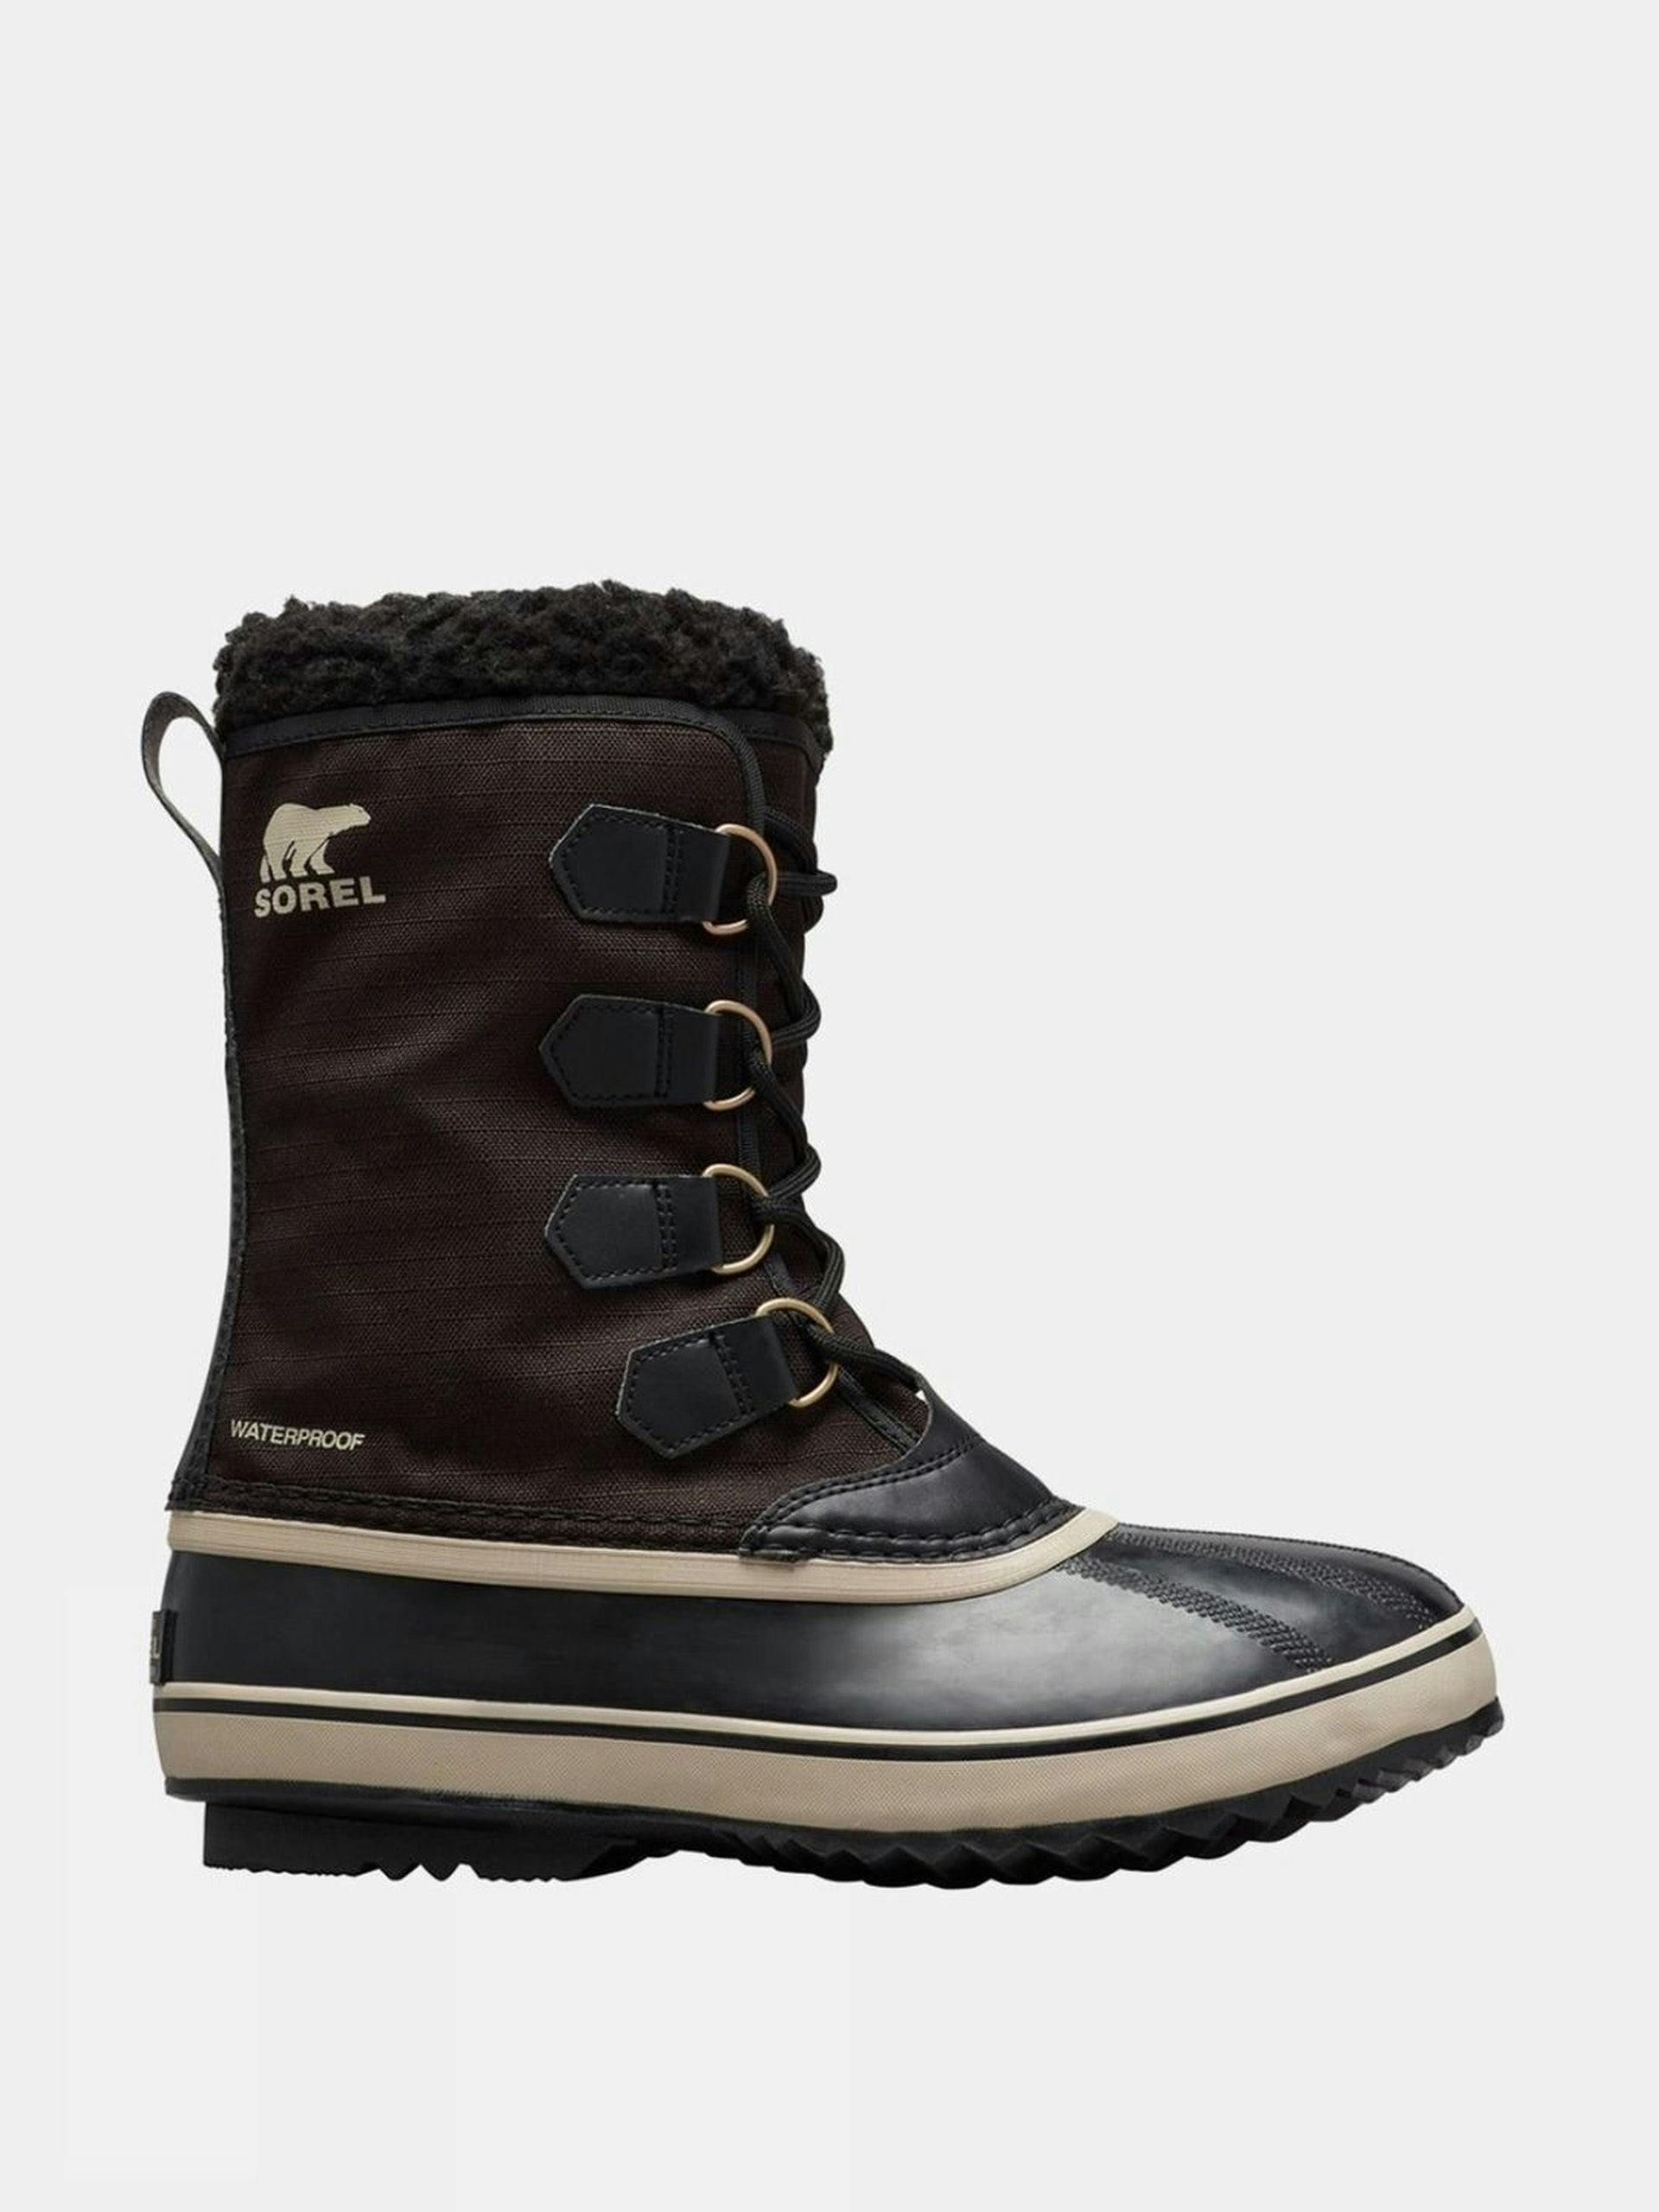 Pac nylon boots